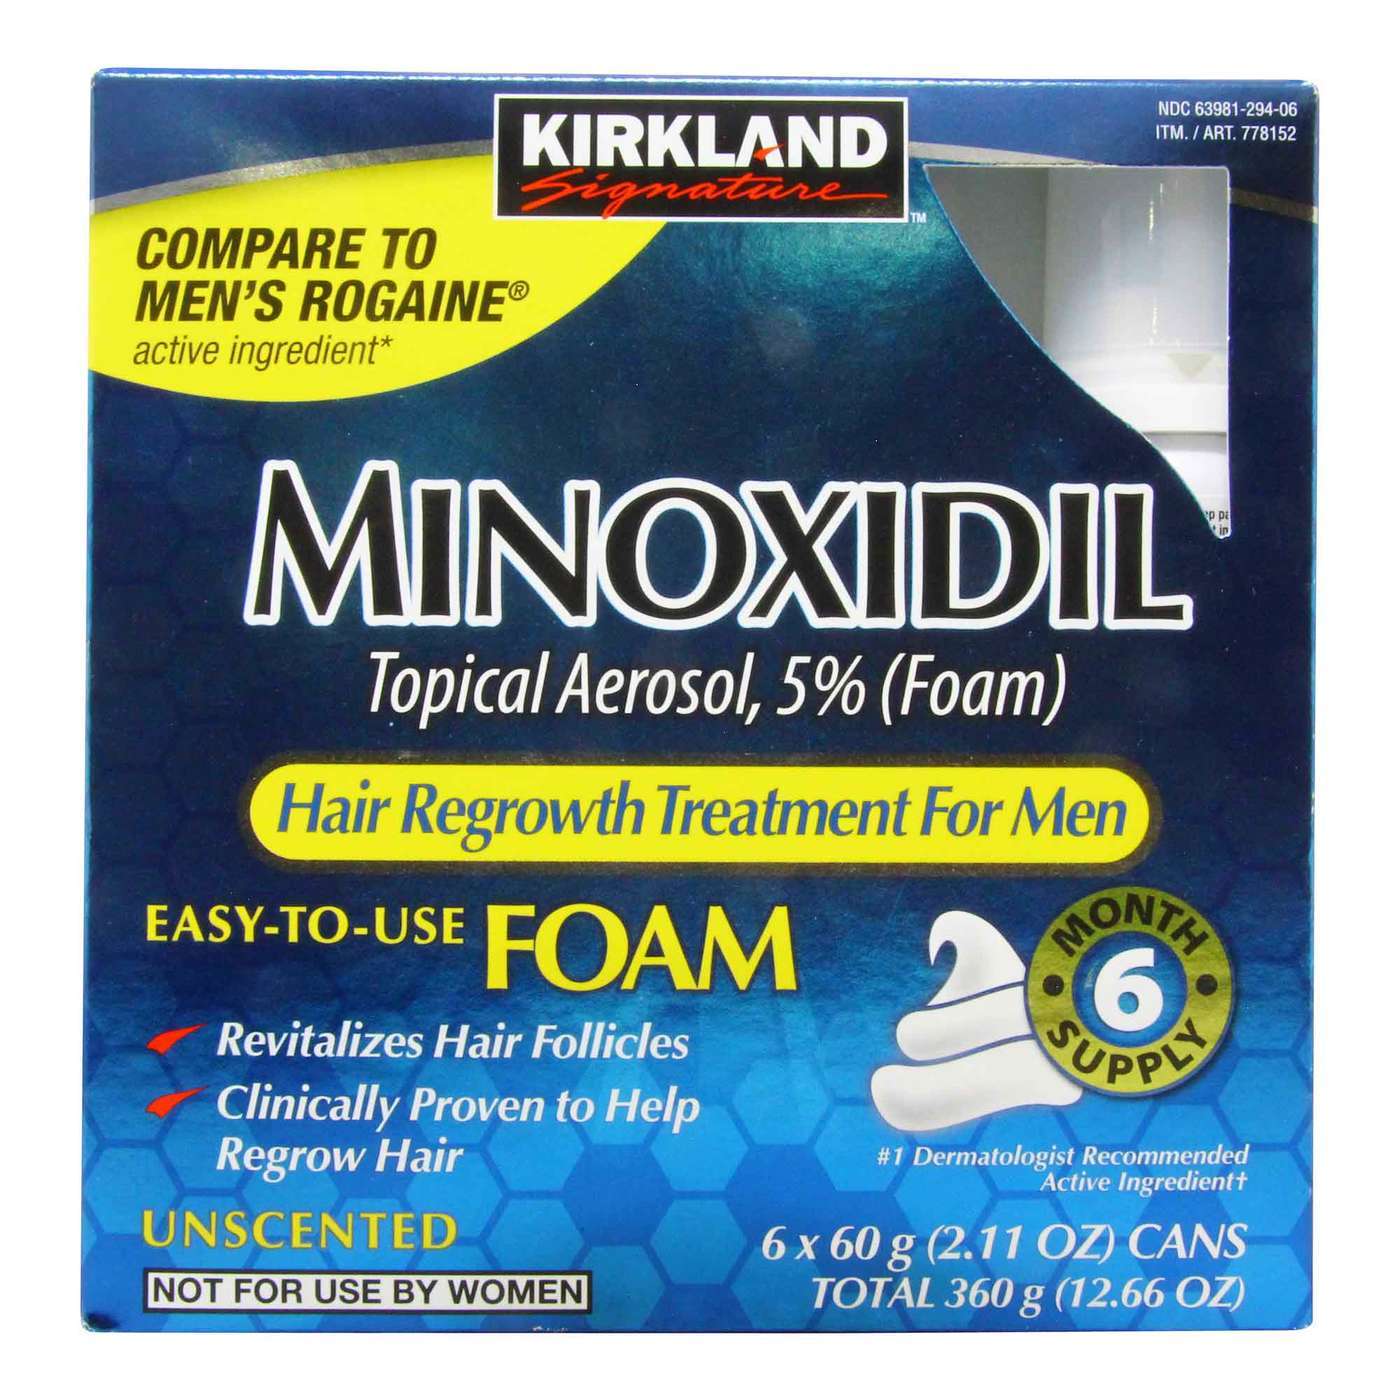 Kirkland Minoxidil Topical Aerosol 5% Foam Hair Regrowth Treatment For Men  - Kích mọc tóc 60g